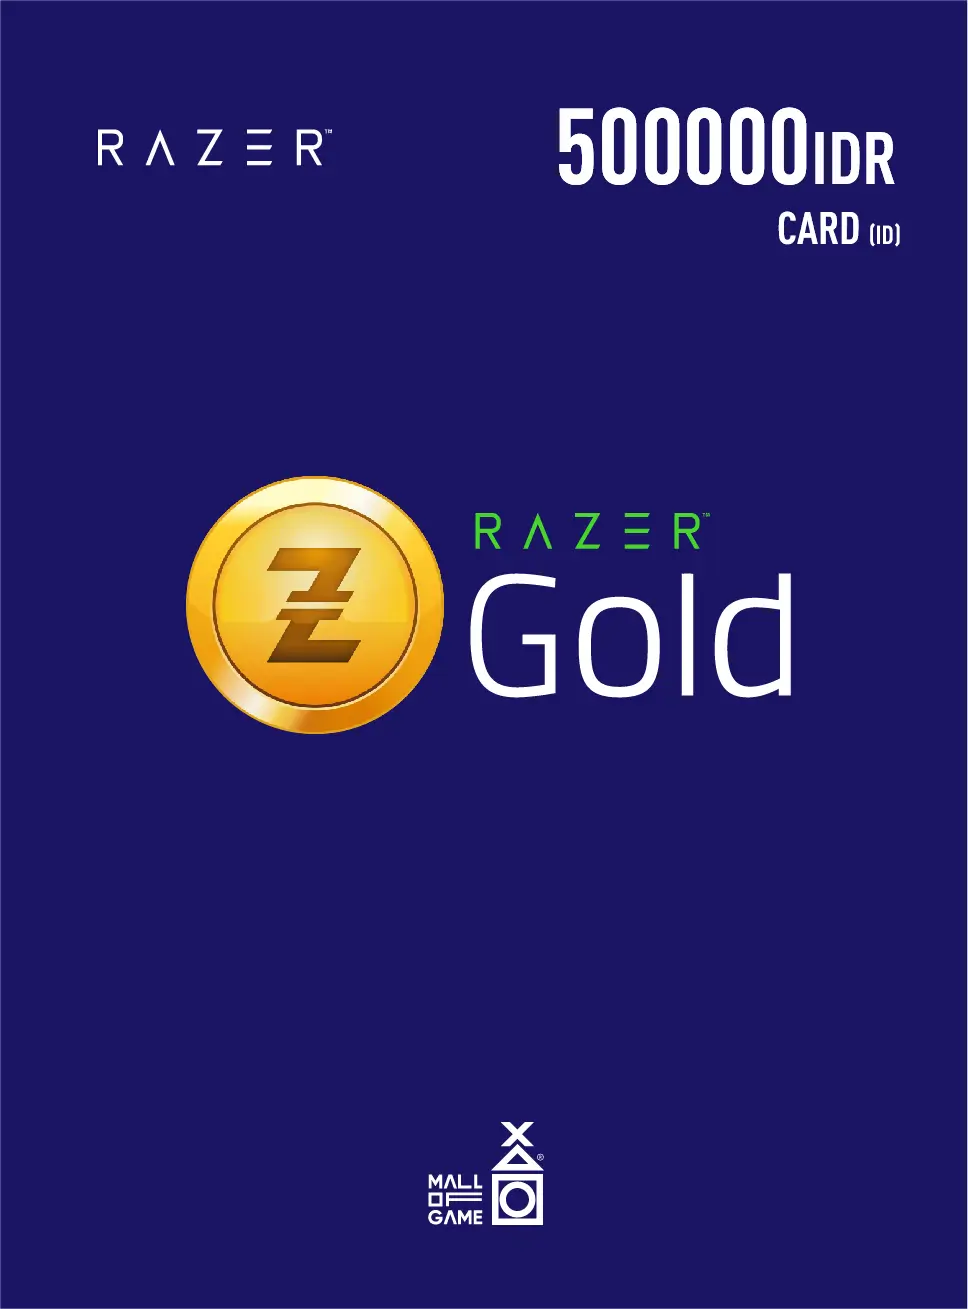 Razer Gold IDR500,000 (ID)